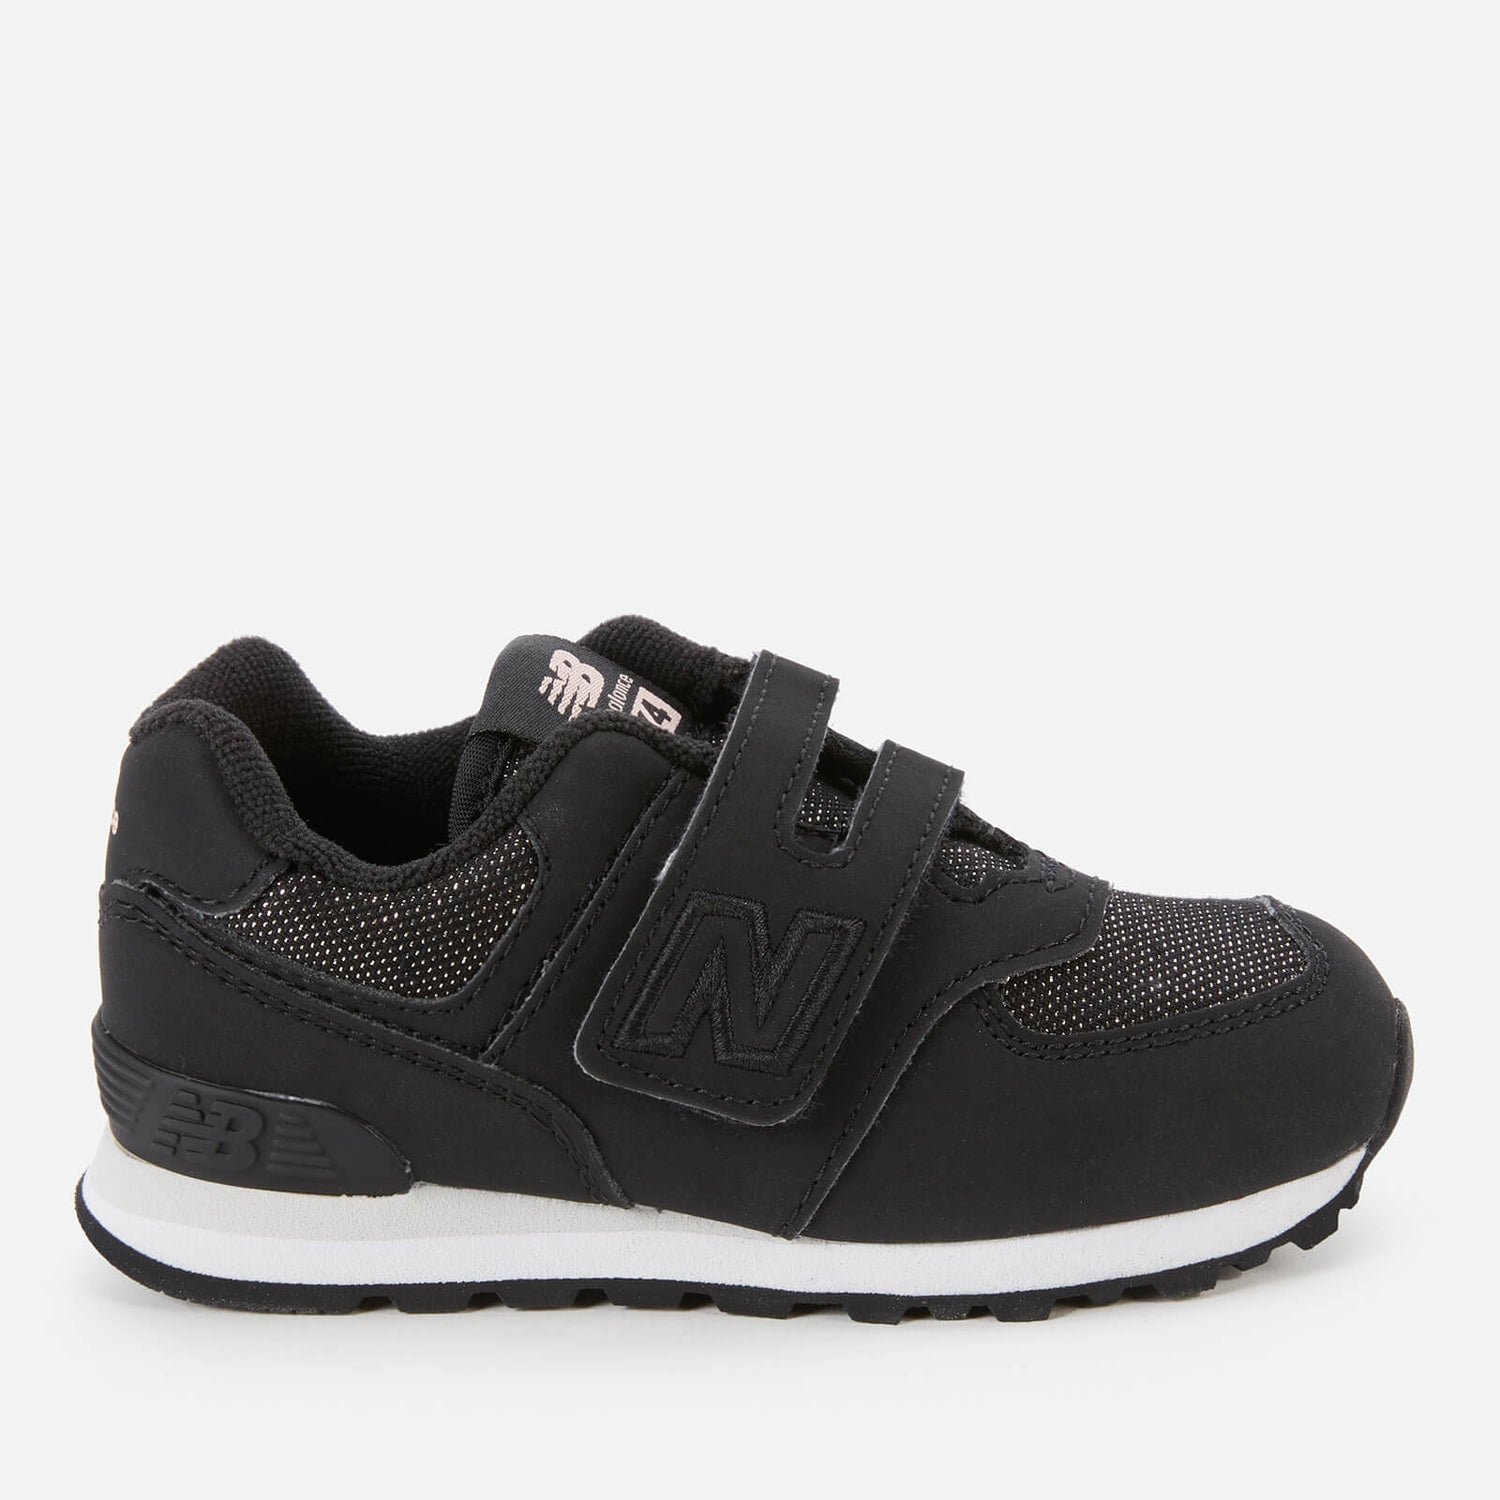 New Balance Infant Velcro 574 Strap Trainers - Black - UK 4.5 Toddler